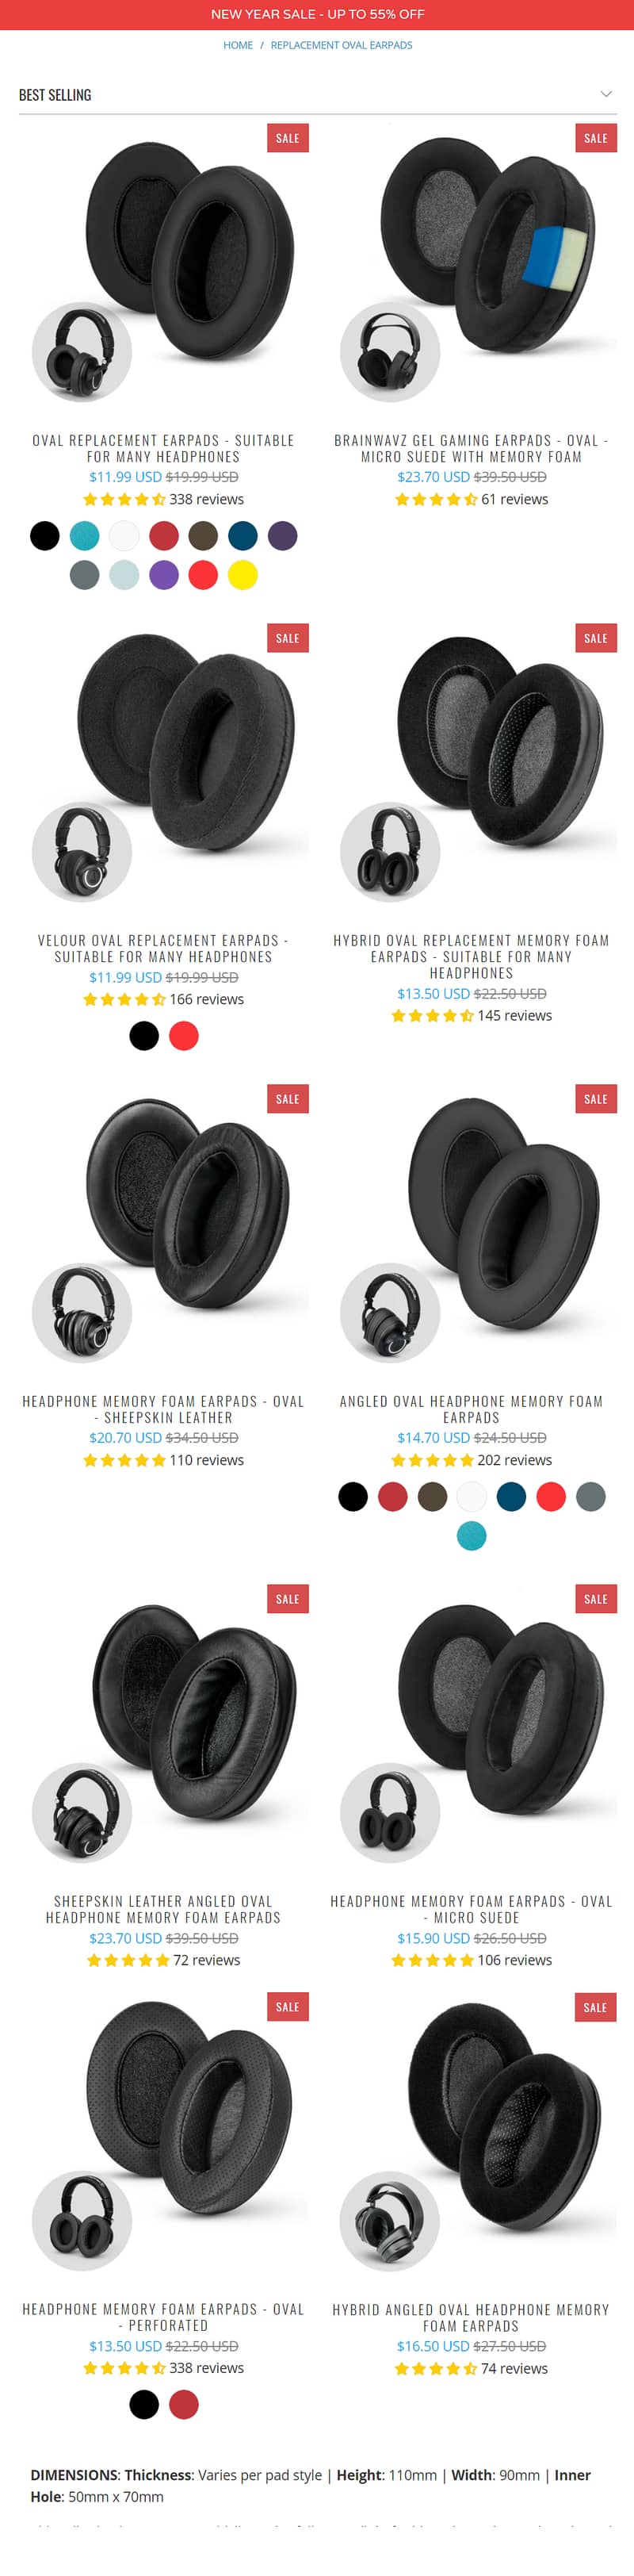 Headphones Cushion, Headphone EarPads, ( Brainwavz Audio) -Oval Shape 2